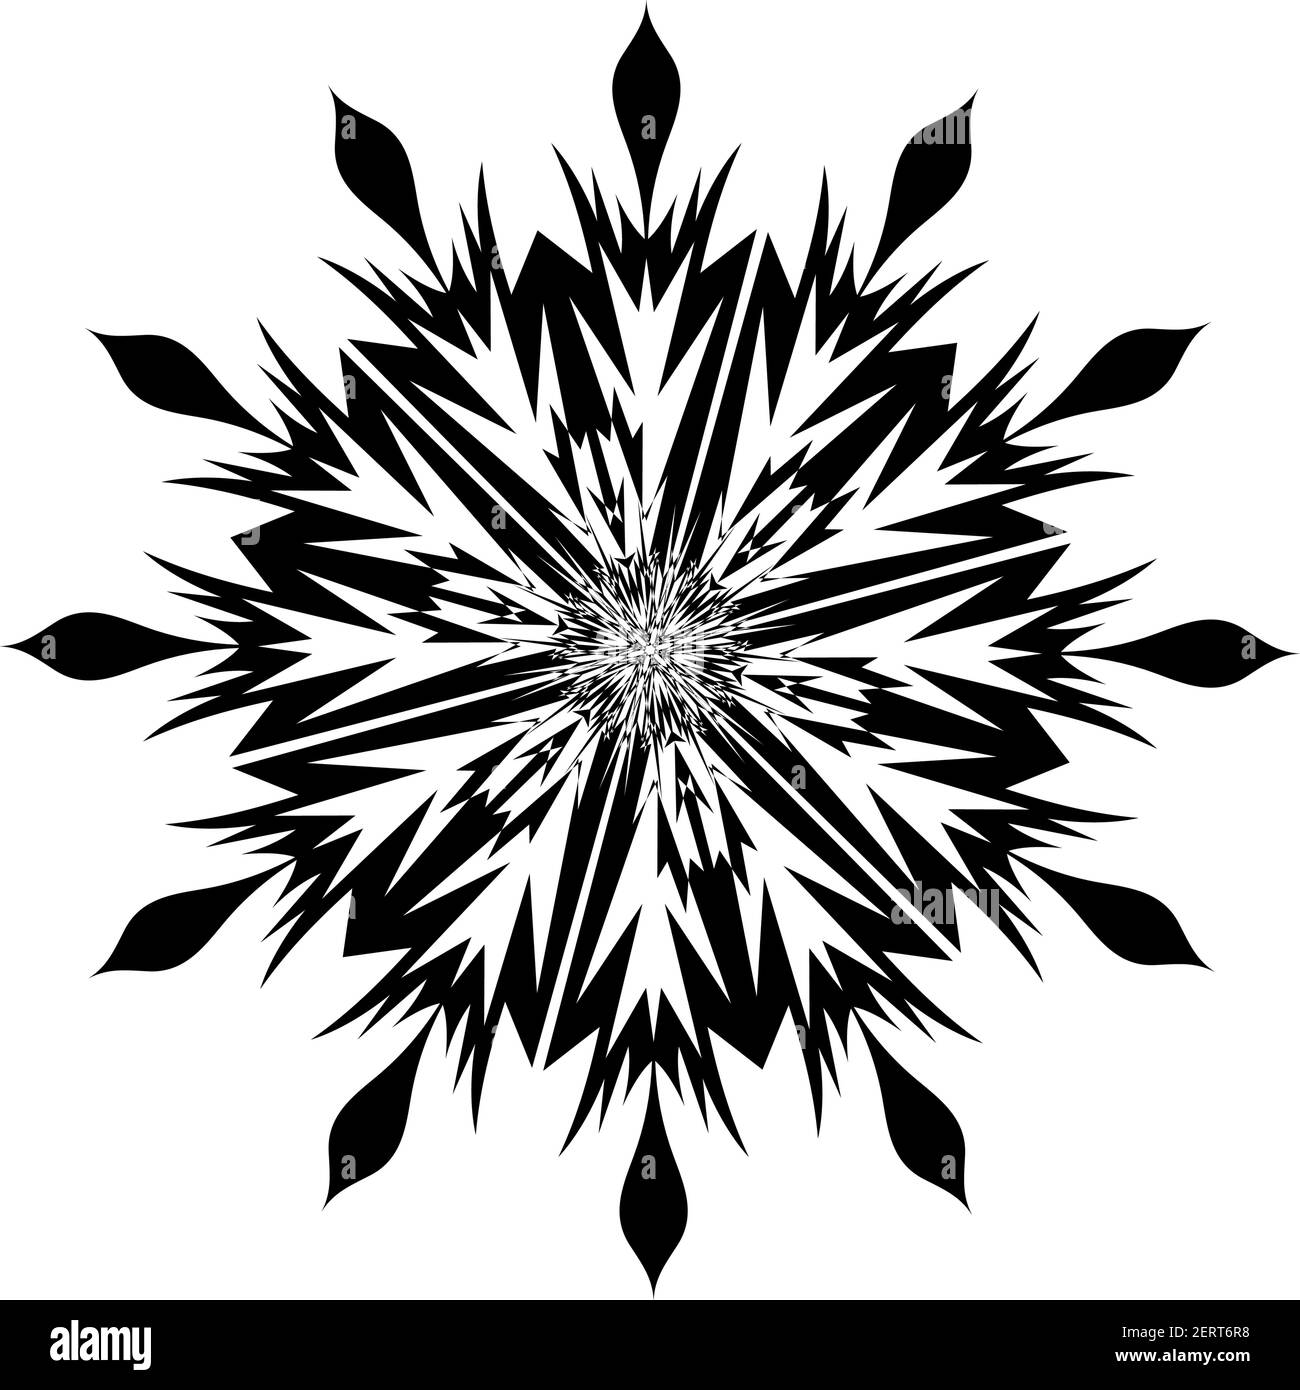 Snowflake Icon. Snowflake Icon picture. Snowflake in Flat Design. Pattern of Snow, Black Color Design. Vector illustration. Stock Vector